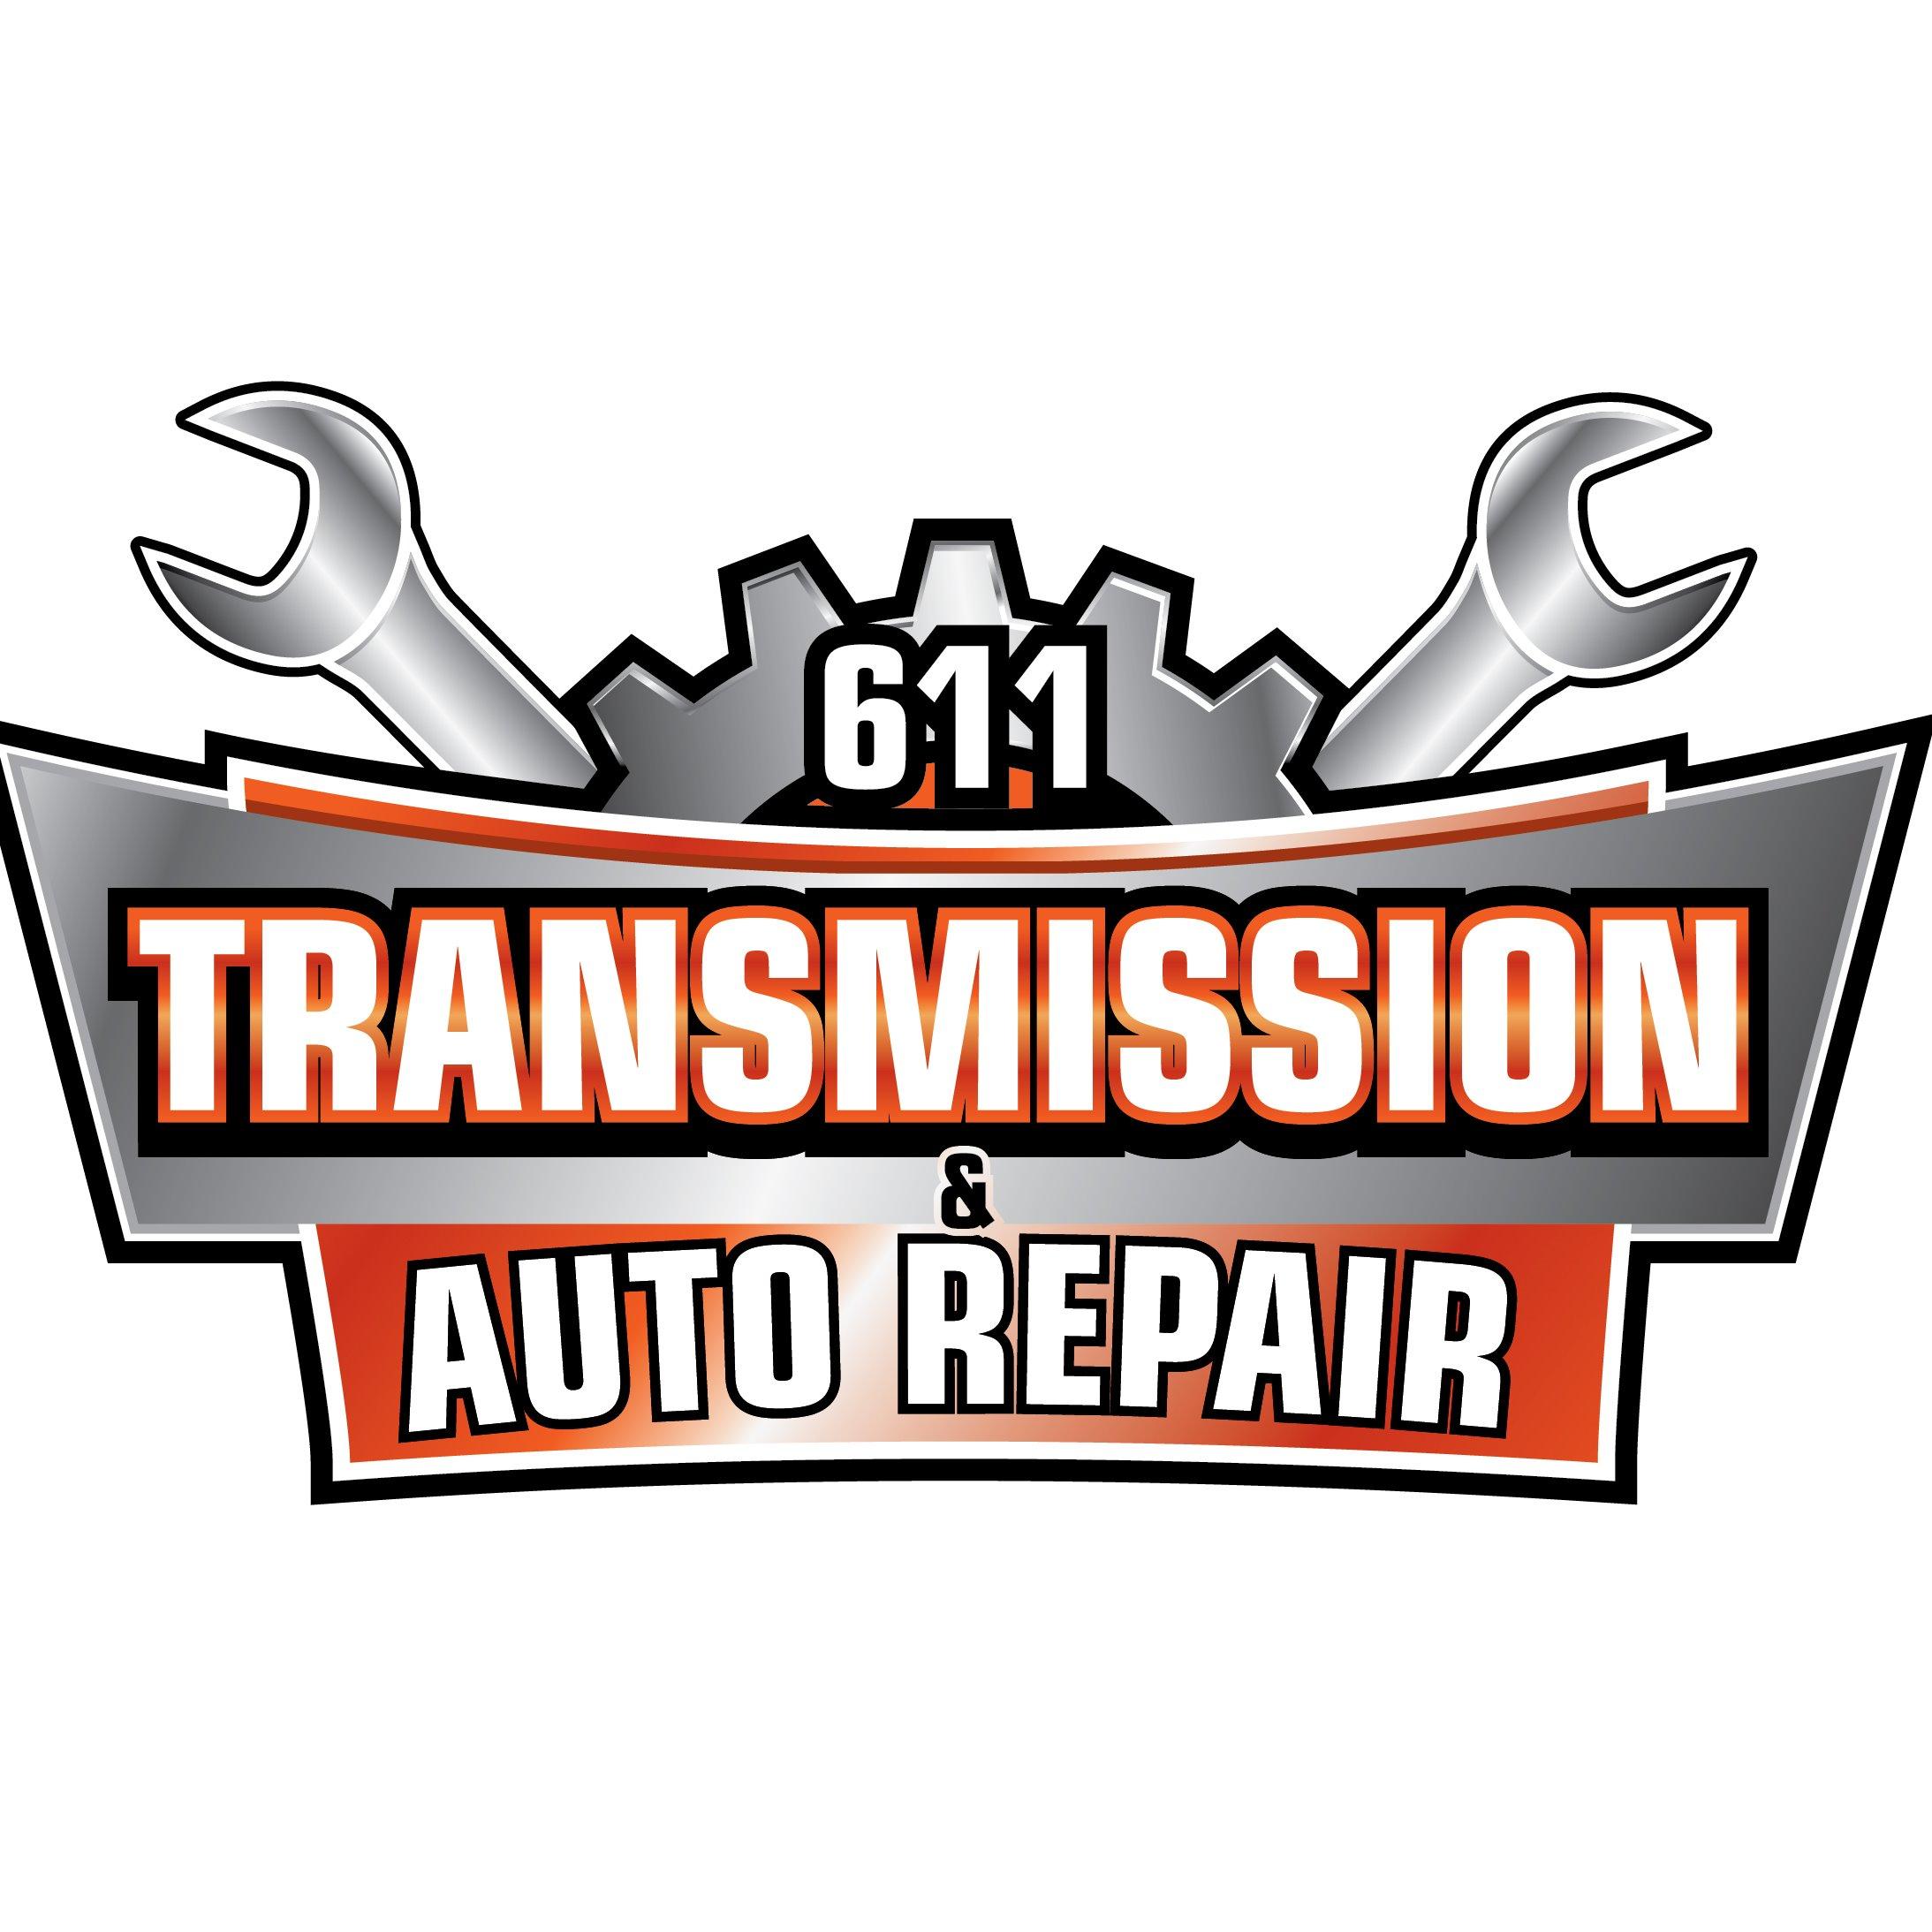 611 Transmission & Auto Repair - Stroudsburg, PA 18360 - (570)730-4800 | ShowMeLocal.com